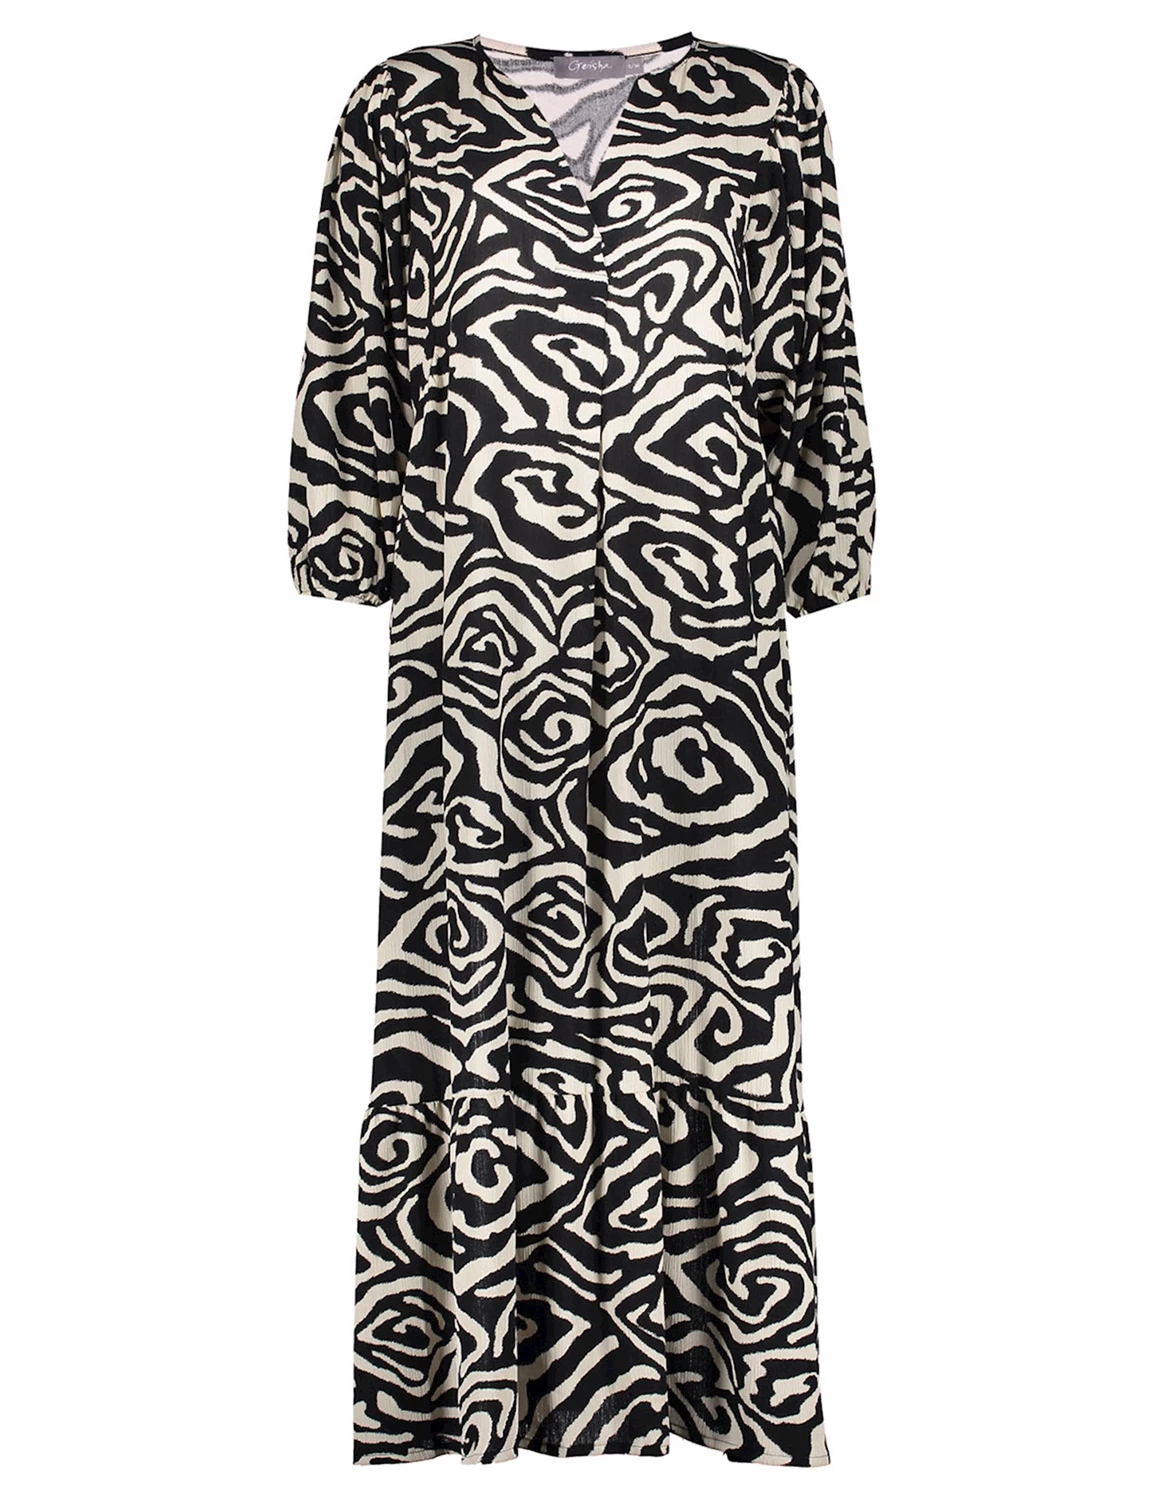 Arthur Conan Doyle verdediging Visa Geisha Dress 37108-20 zwart/wit kopen bij The Stone